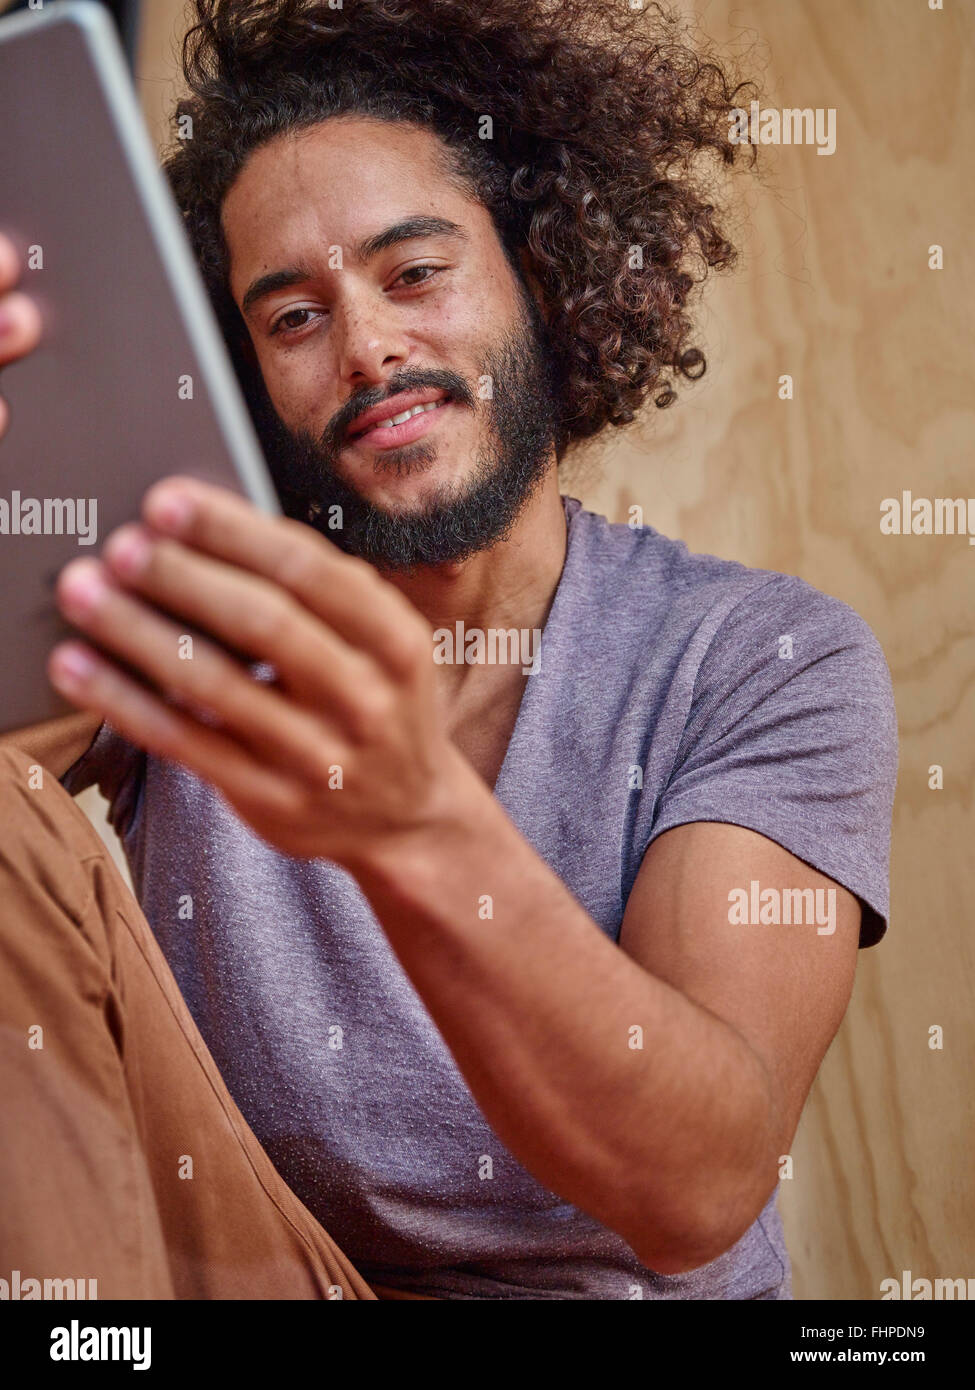 Smiling young man looking at digital tablet Stock Photo